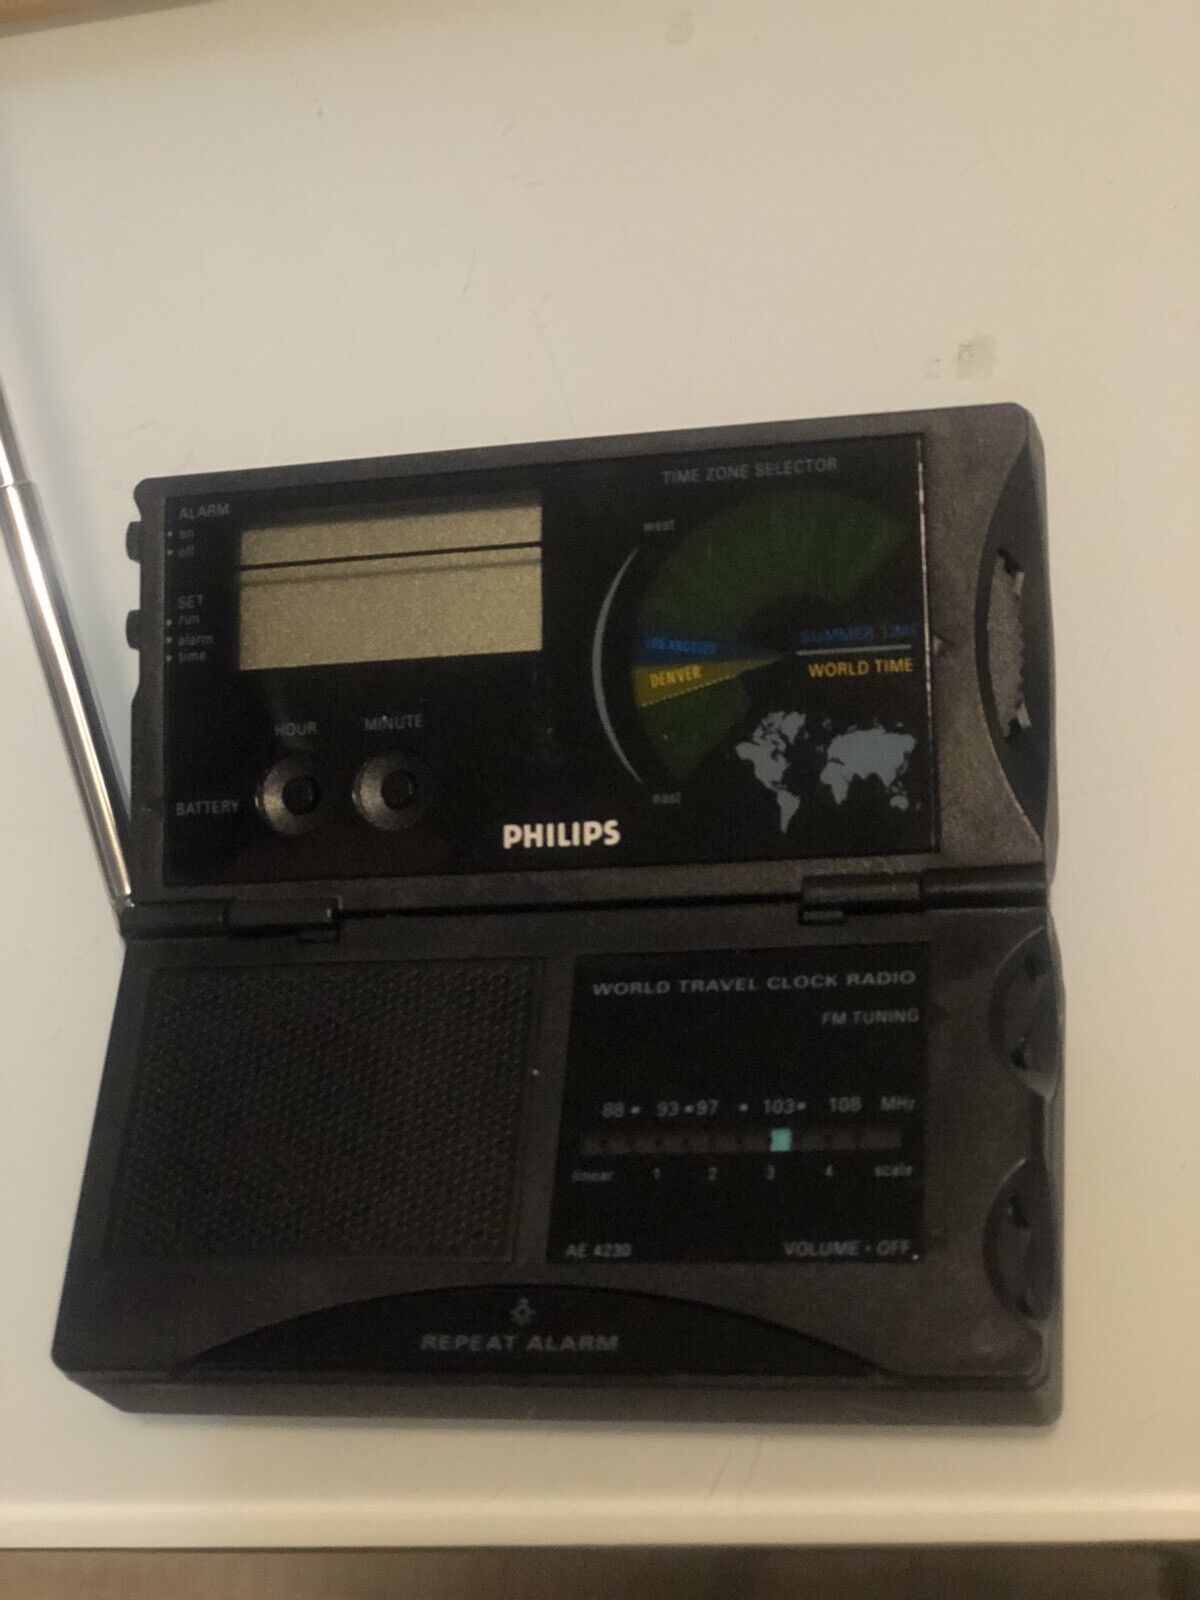 Philips AE 4230 00 Travel Alarm Clock Radio World Time AE4230 TESTED WORKS -read